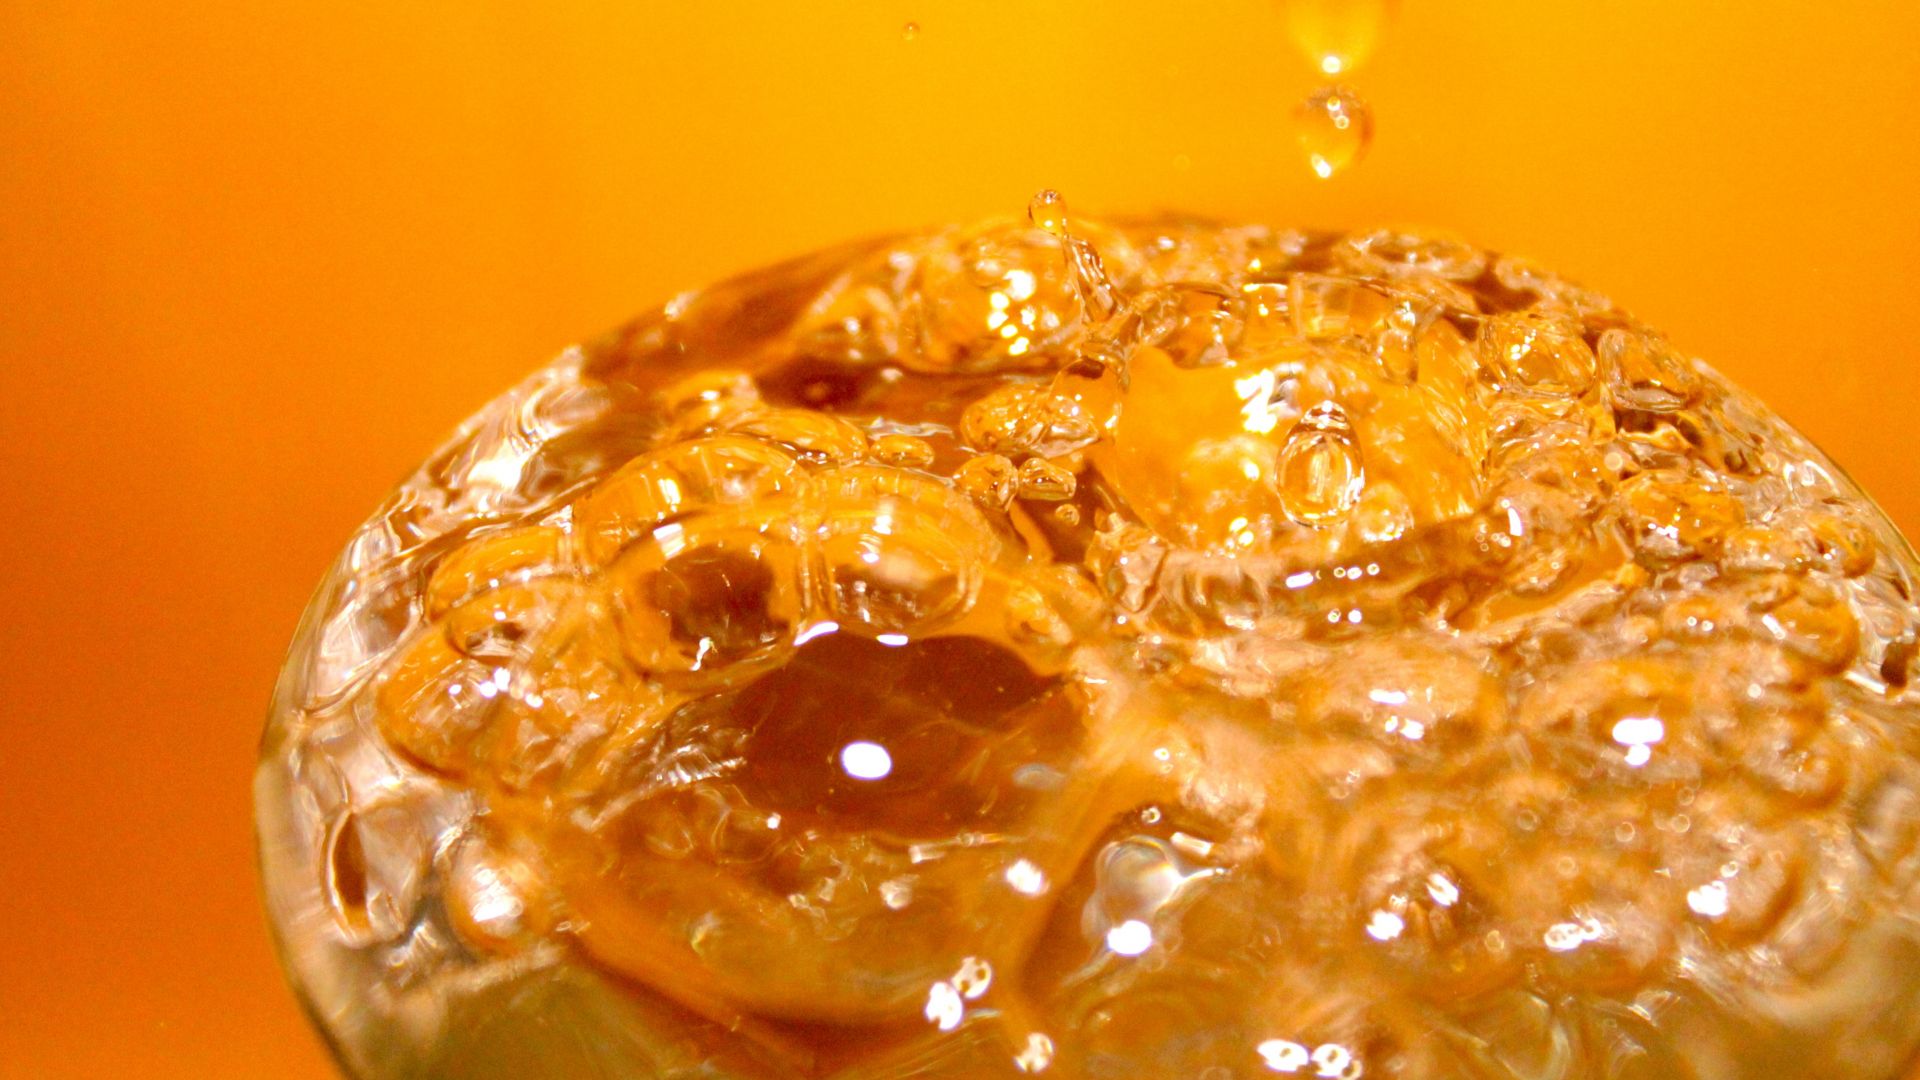 Wallpaper Water drop splash close up